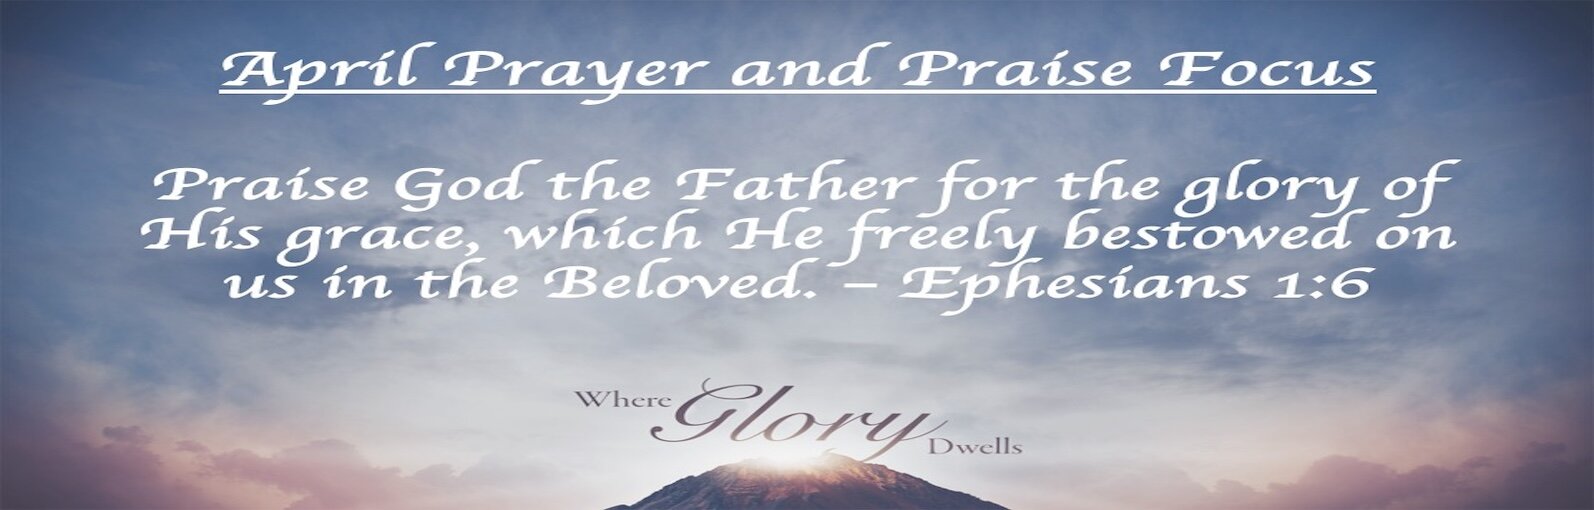 /images/r/april-prayer-themes/c1594x510/april-prayer-themes.jpg